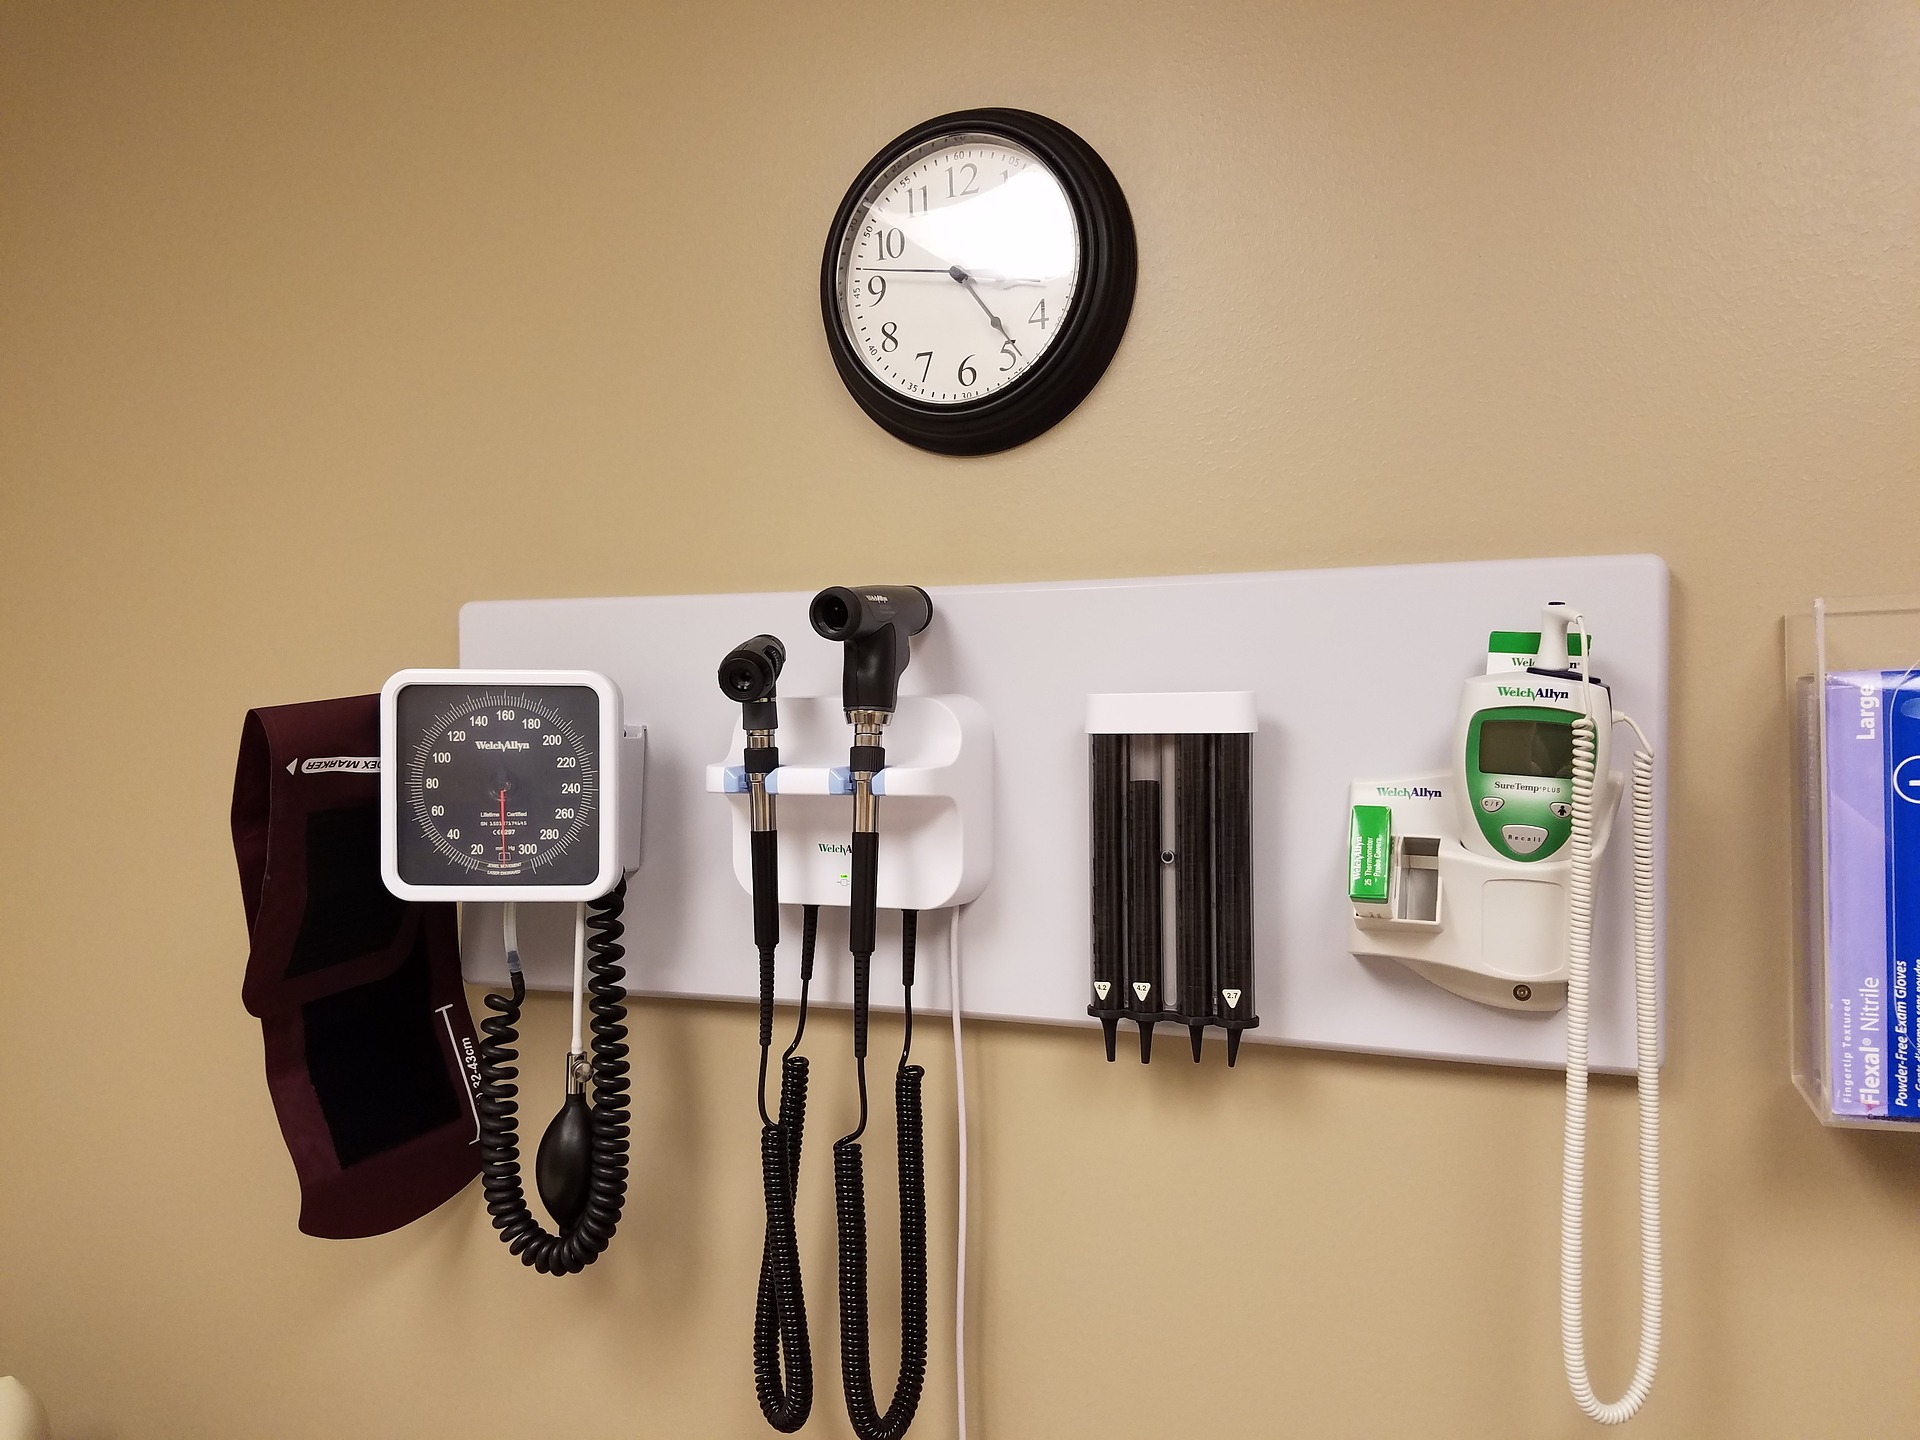 Doctors equipment hanging on wall